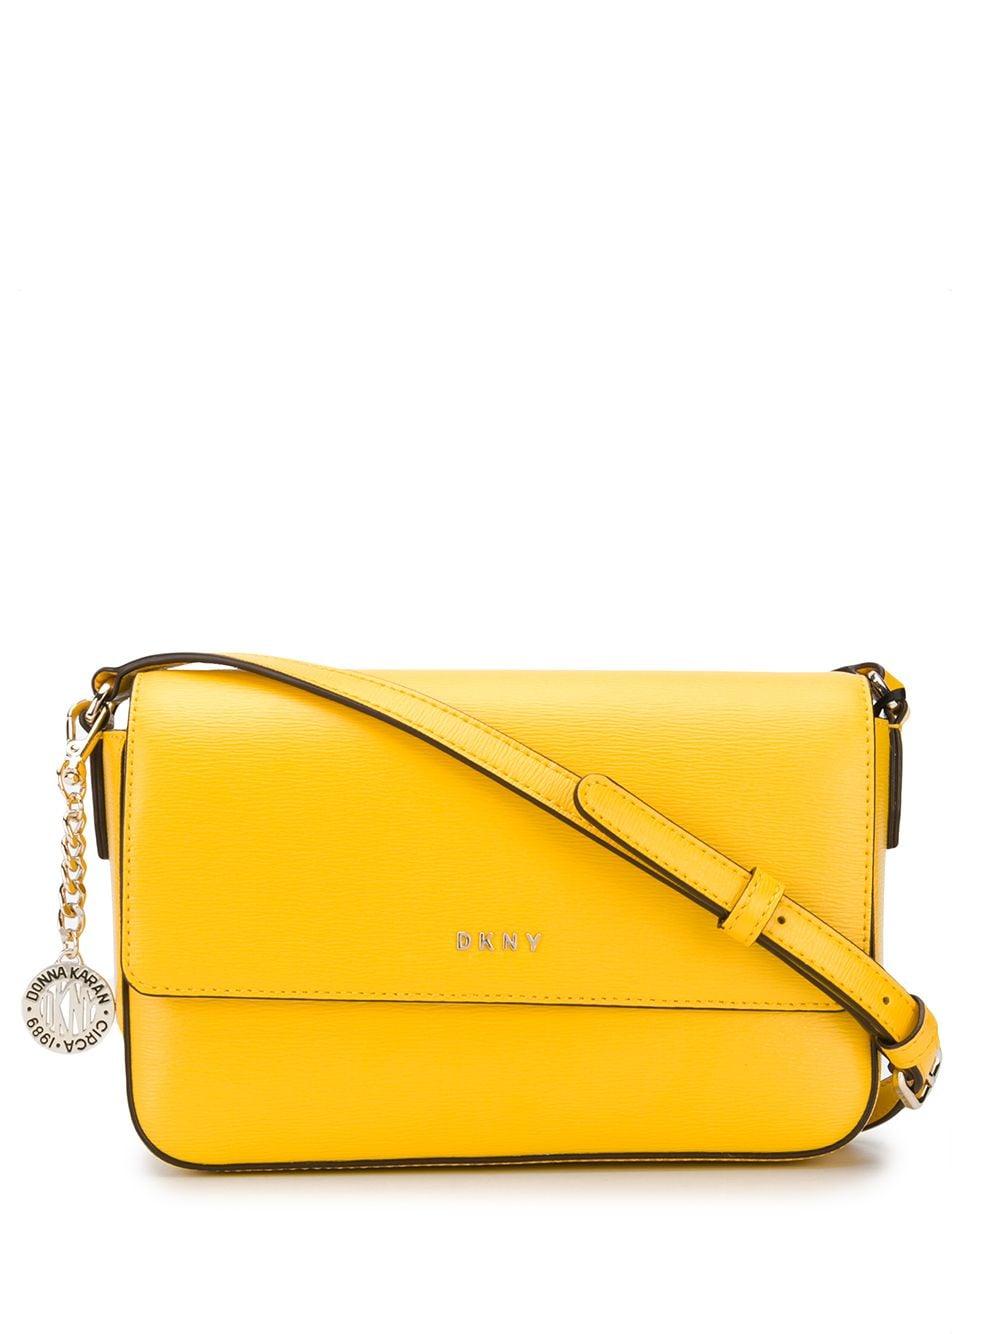 Shadow Deplete nobody DKNY Bryant Leather Crossbody Bag in Yellow | Lyst